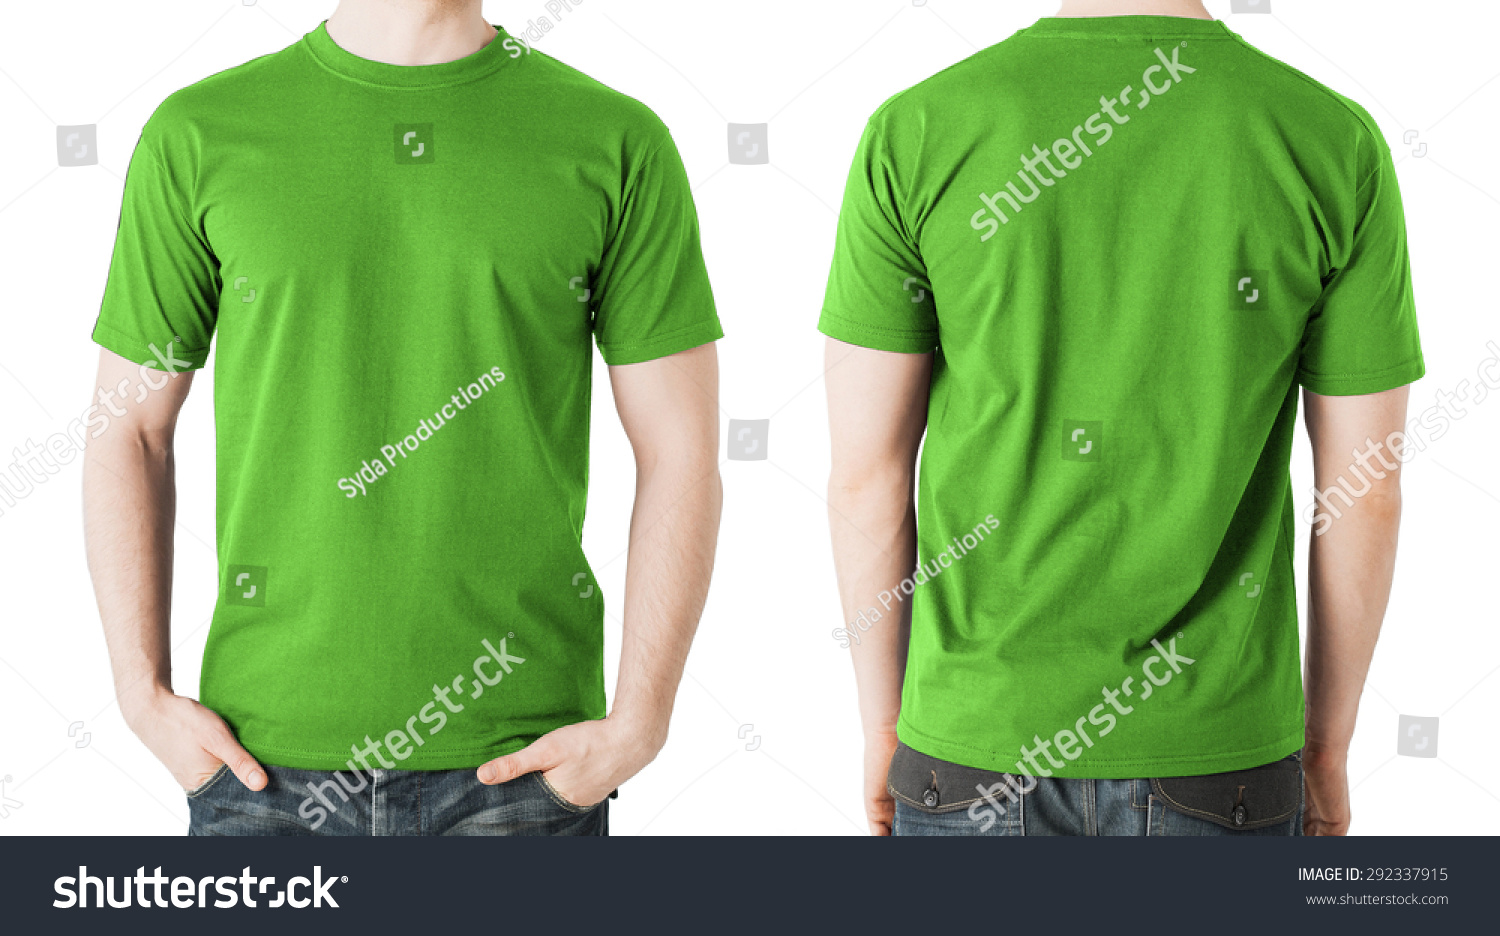 11,531 Green t shirt back Images, Stock Photos & Vectors | Shutterstock